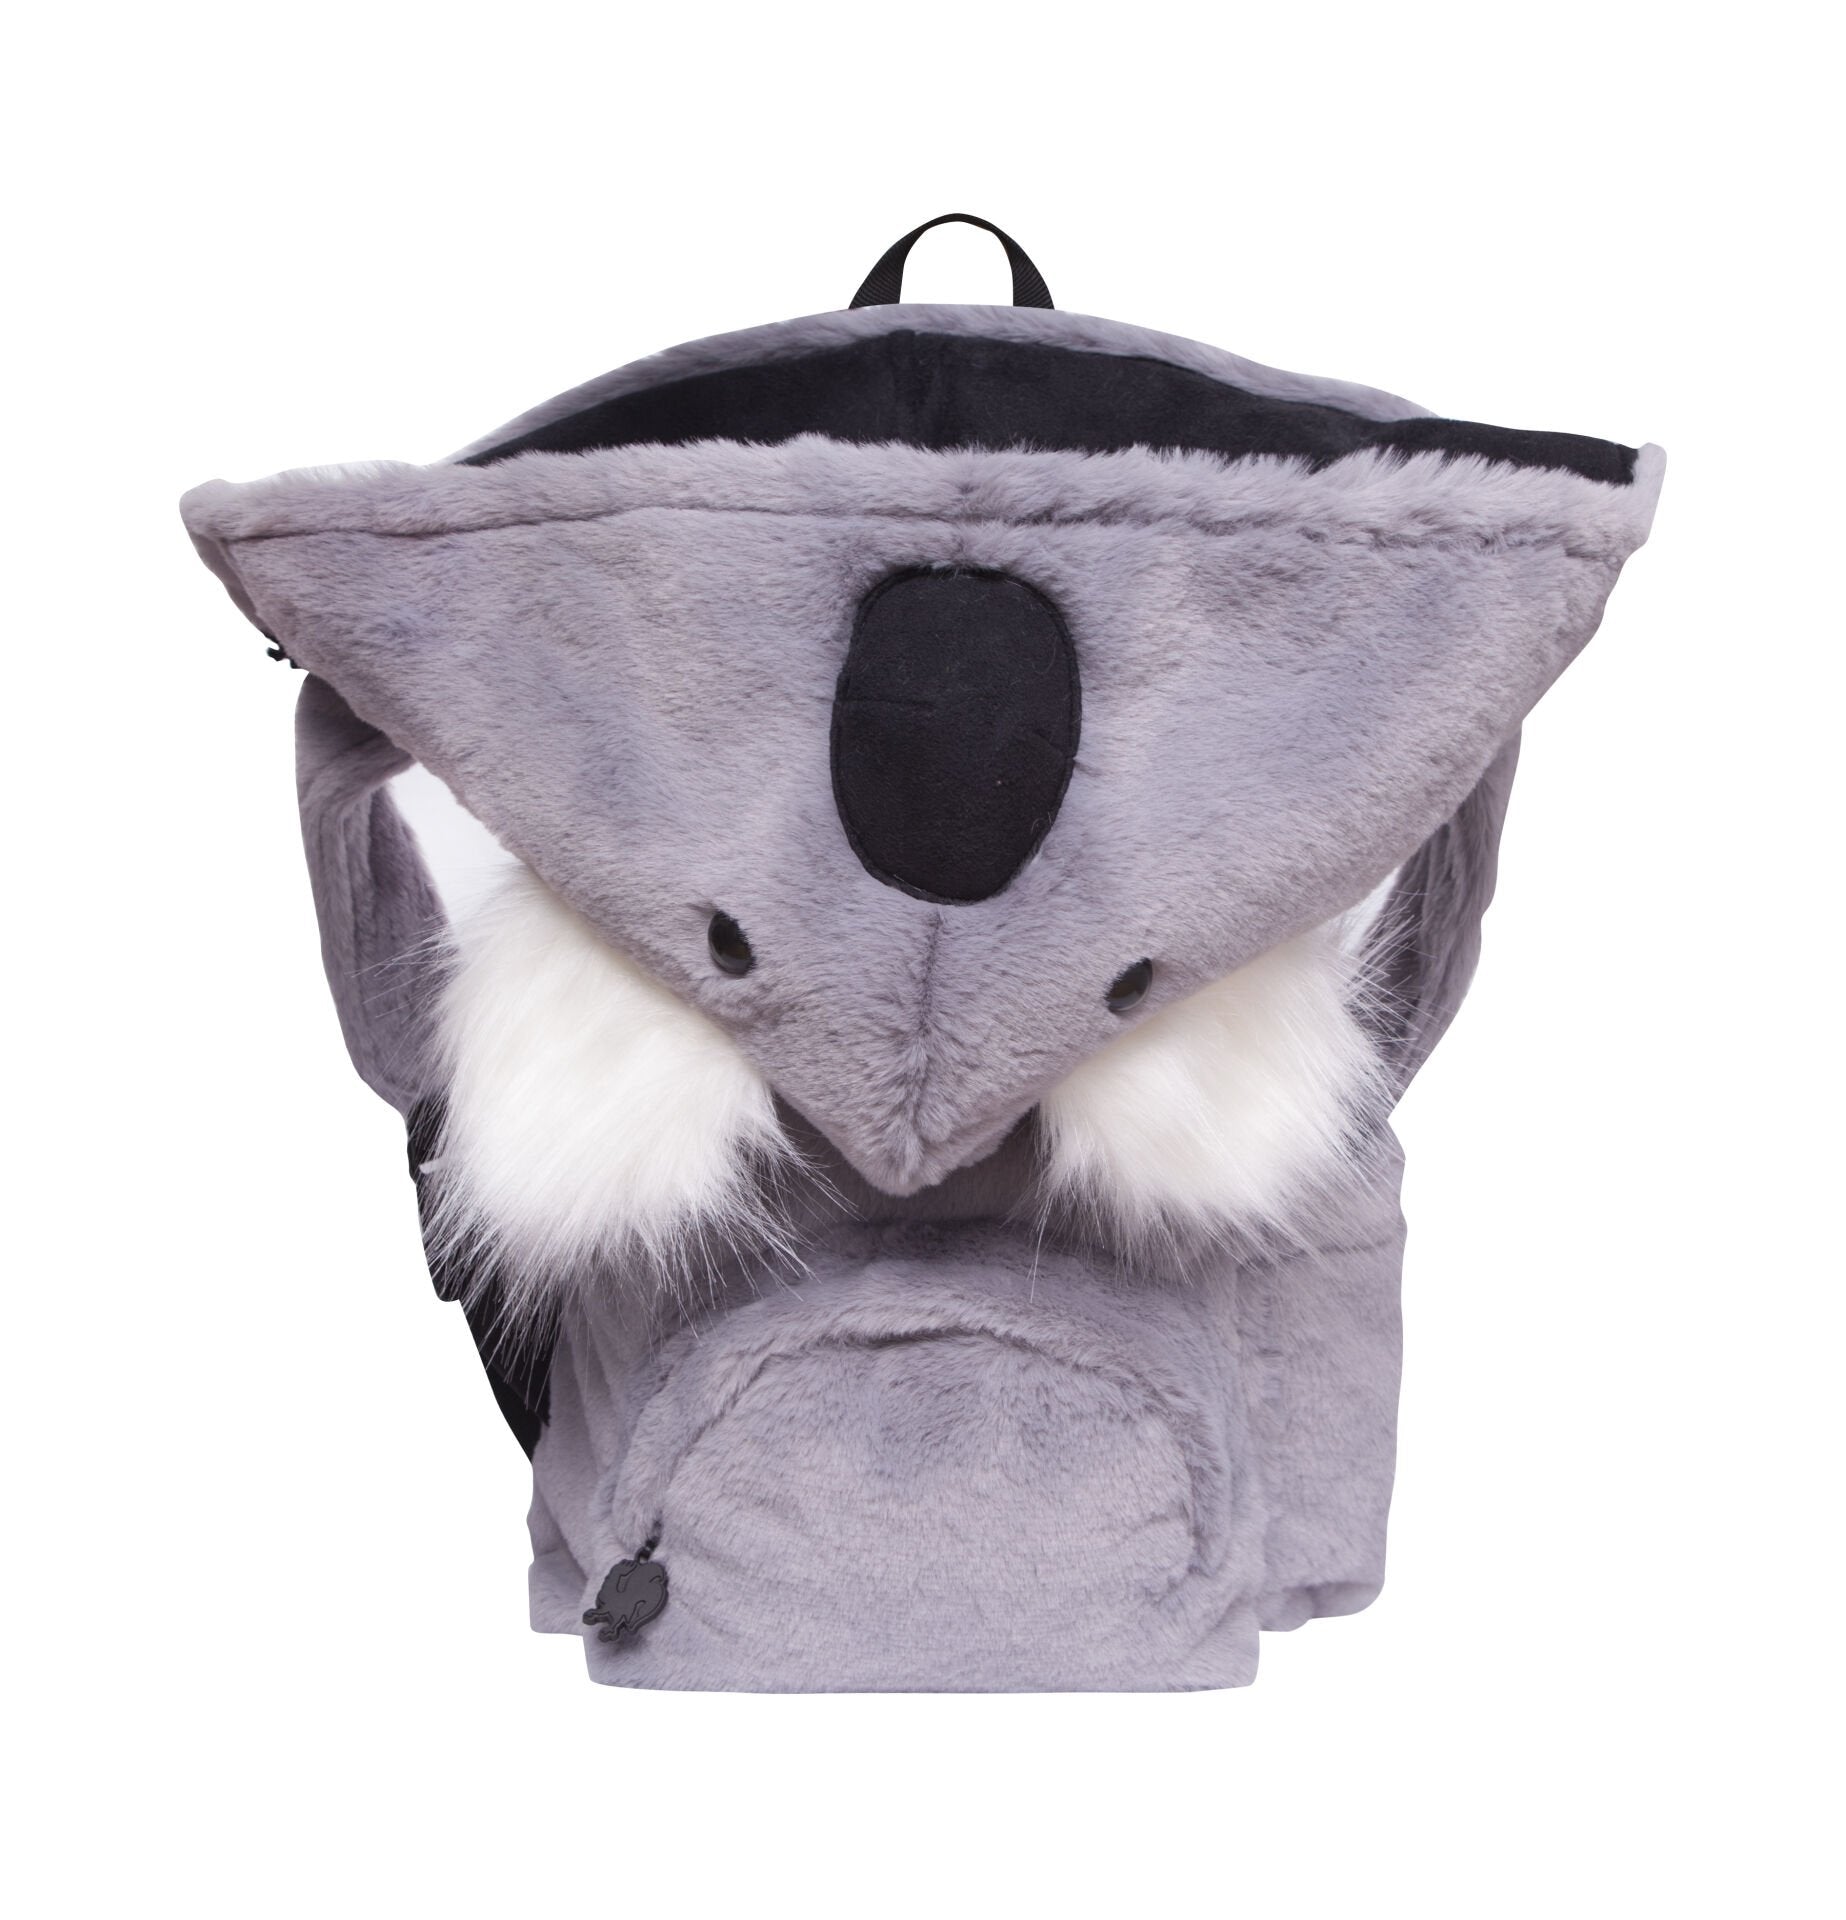 "NEW" Koala- Little Kids Backpack with Detachable Hood - Water-Repellent